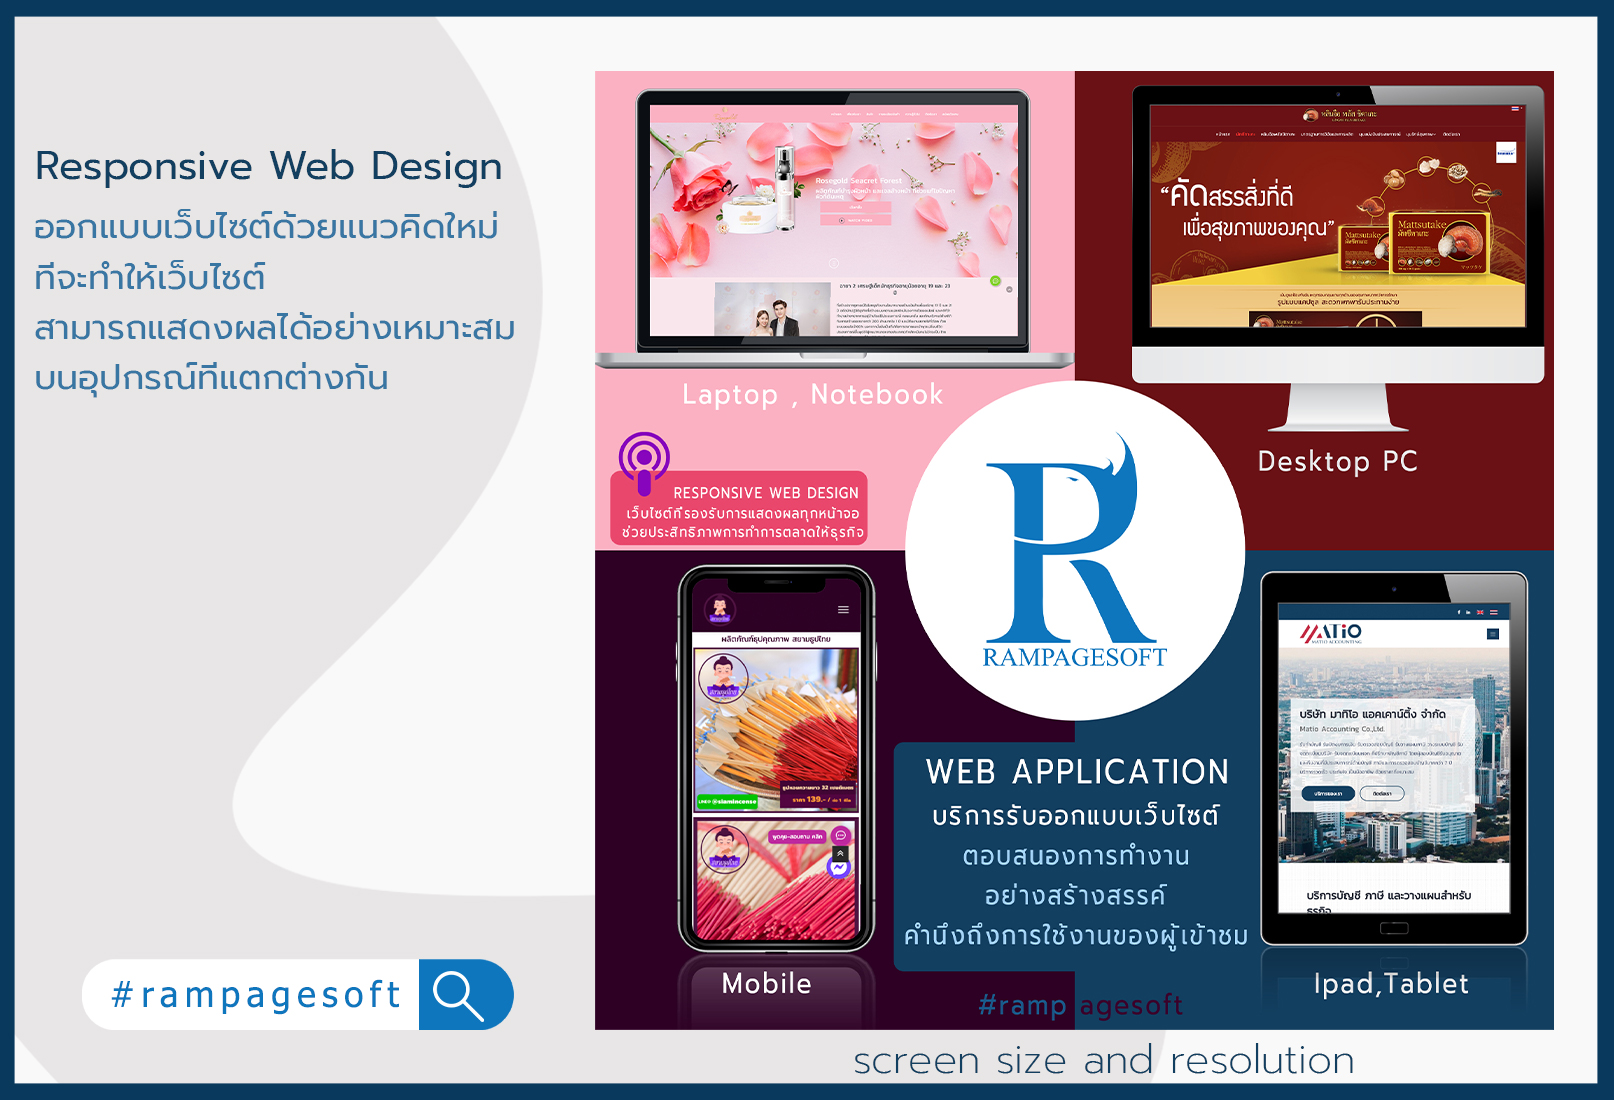 Responsive Web Design | TTT-WEBSITE รับทําเว็บไซต์ เว็บขยายสายงาน